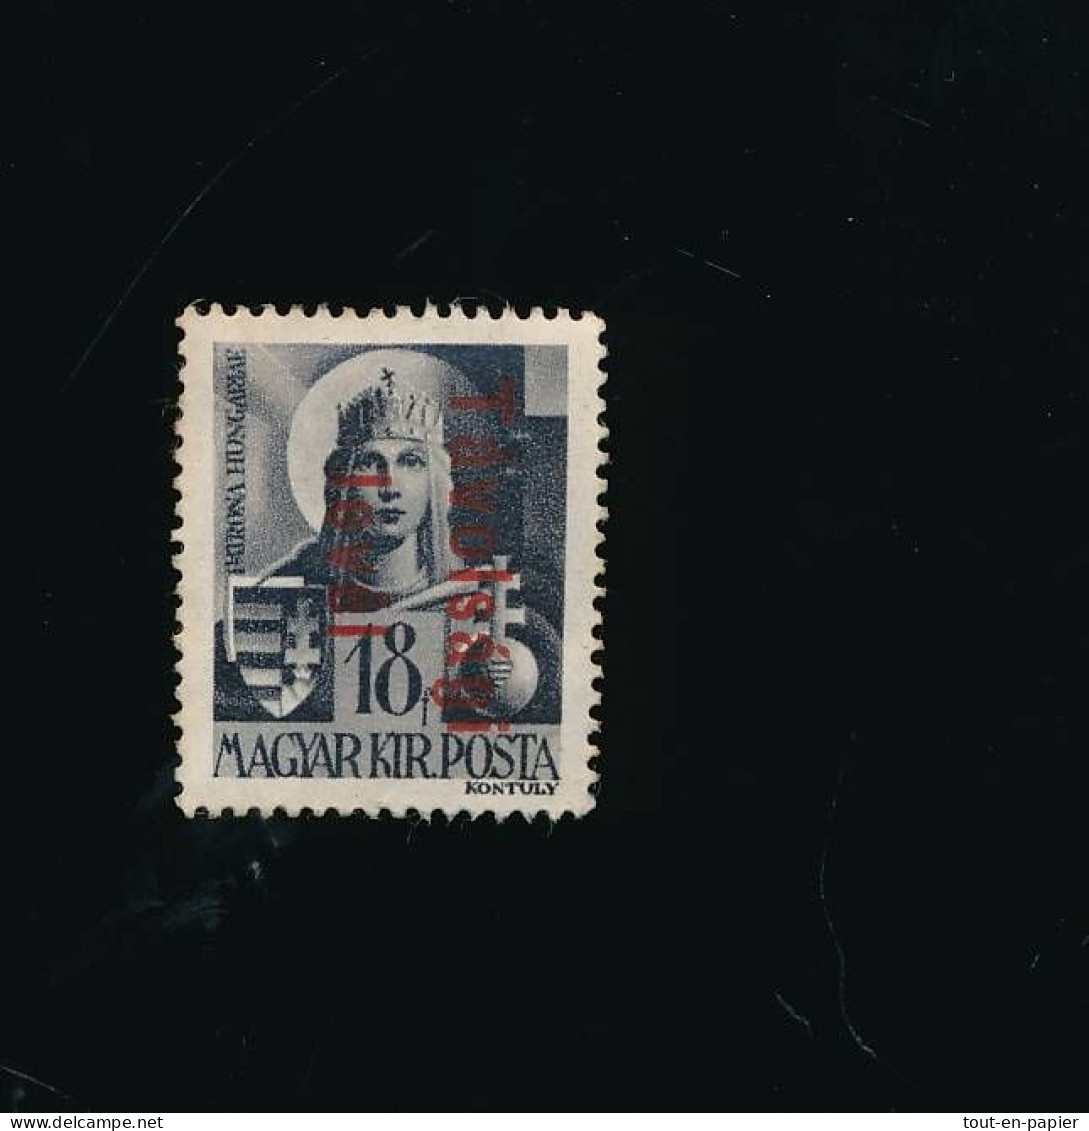 Timbre Hongrois Hongrie (Magyar Kir Posta) Avec Deux Surimpressions  1945 - Unused Stamps